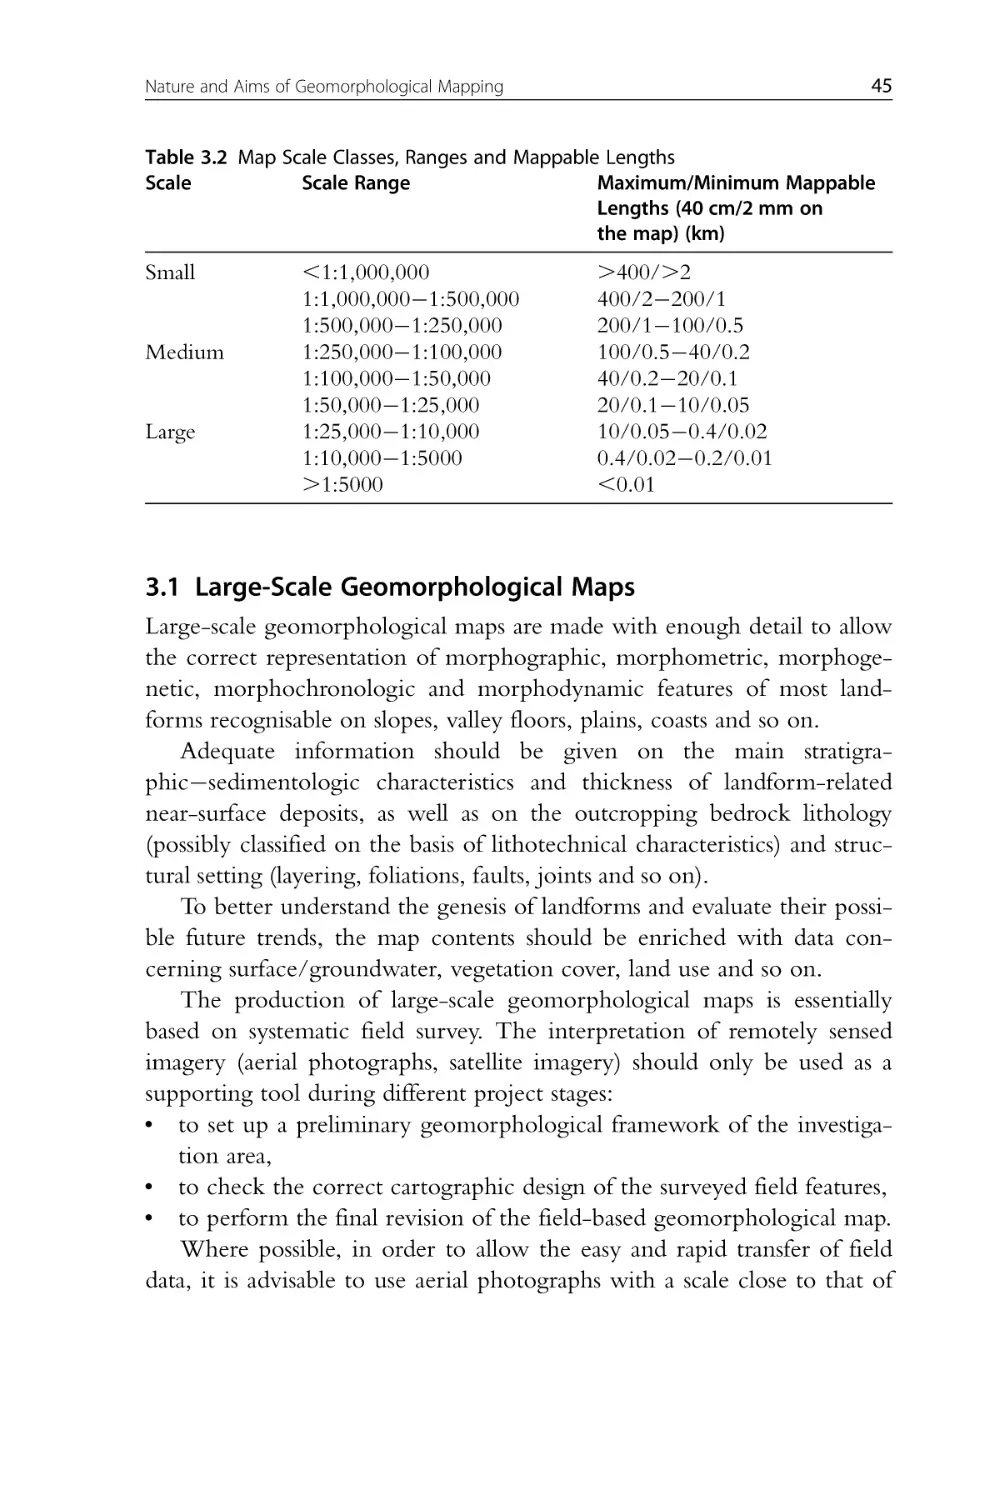 3.1 Large-Scale Geomorphological Maps